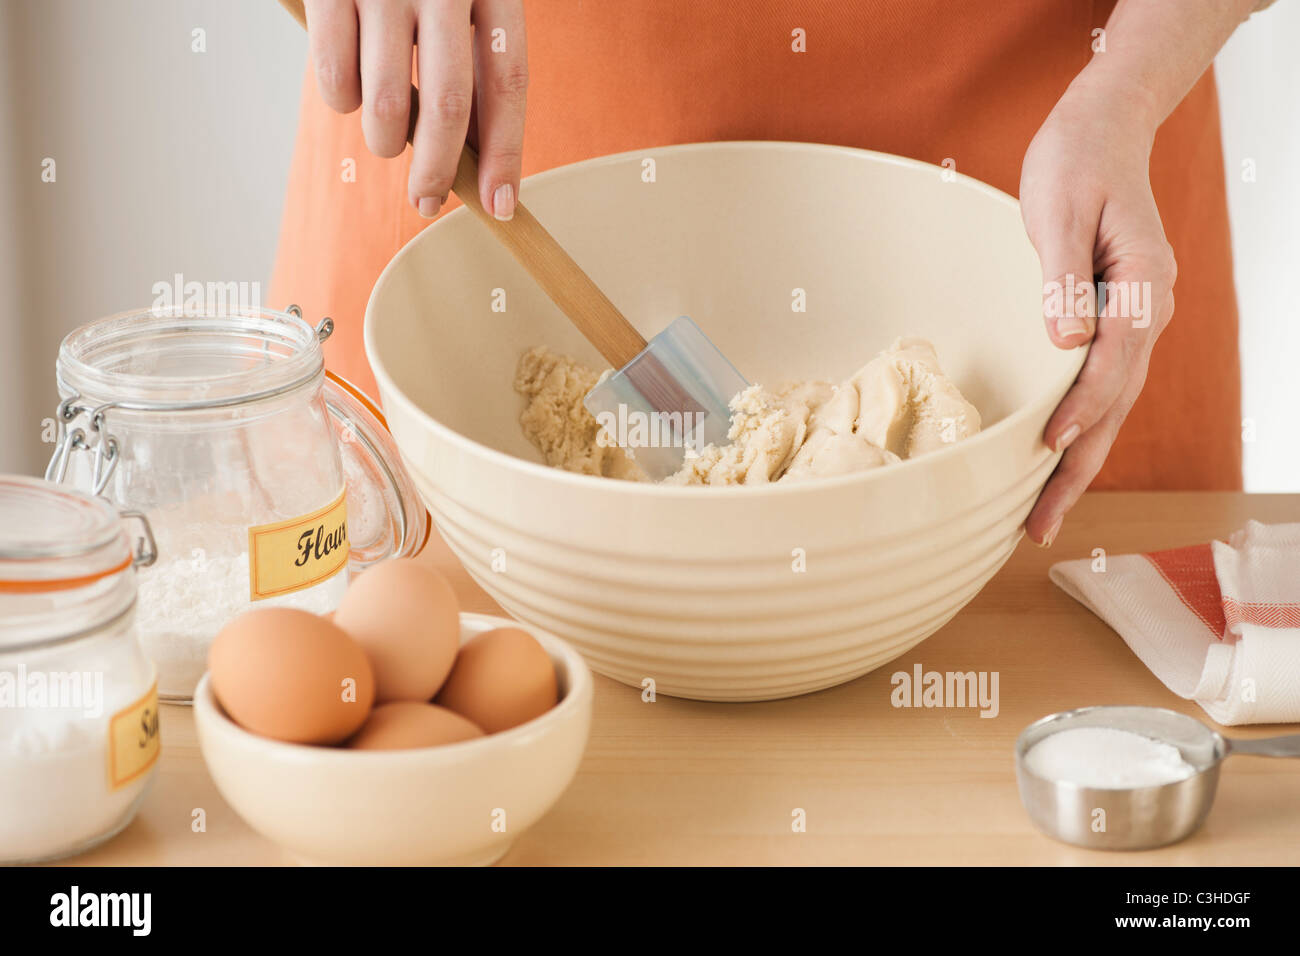 Woman preparing dough in bowl Stock Photo